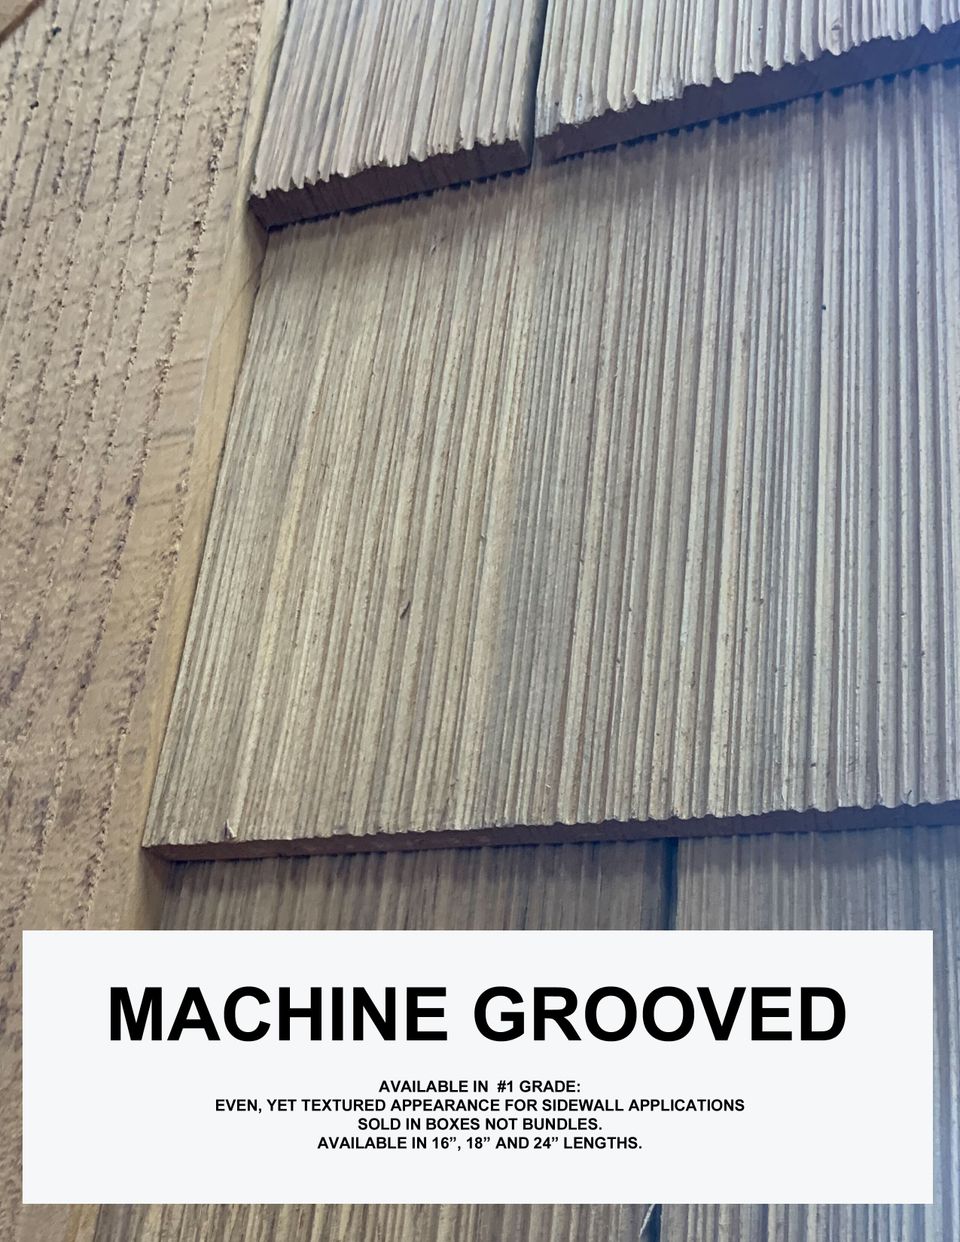 Machine grooved